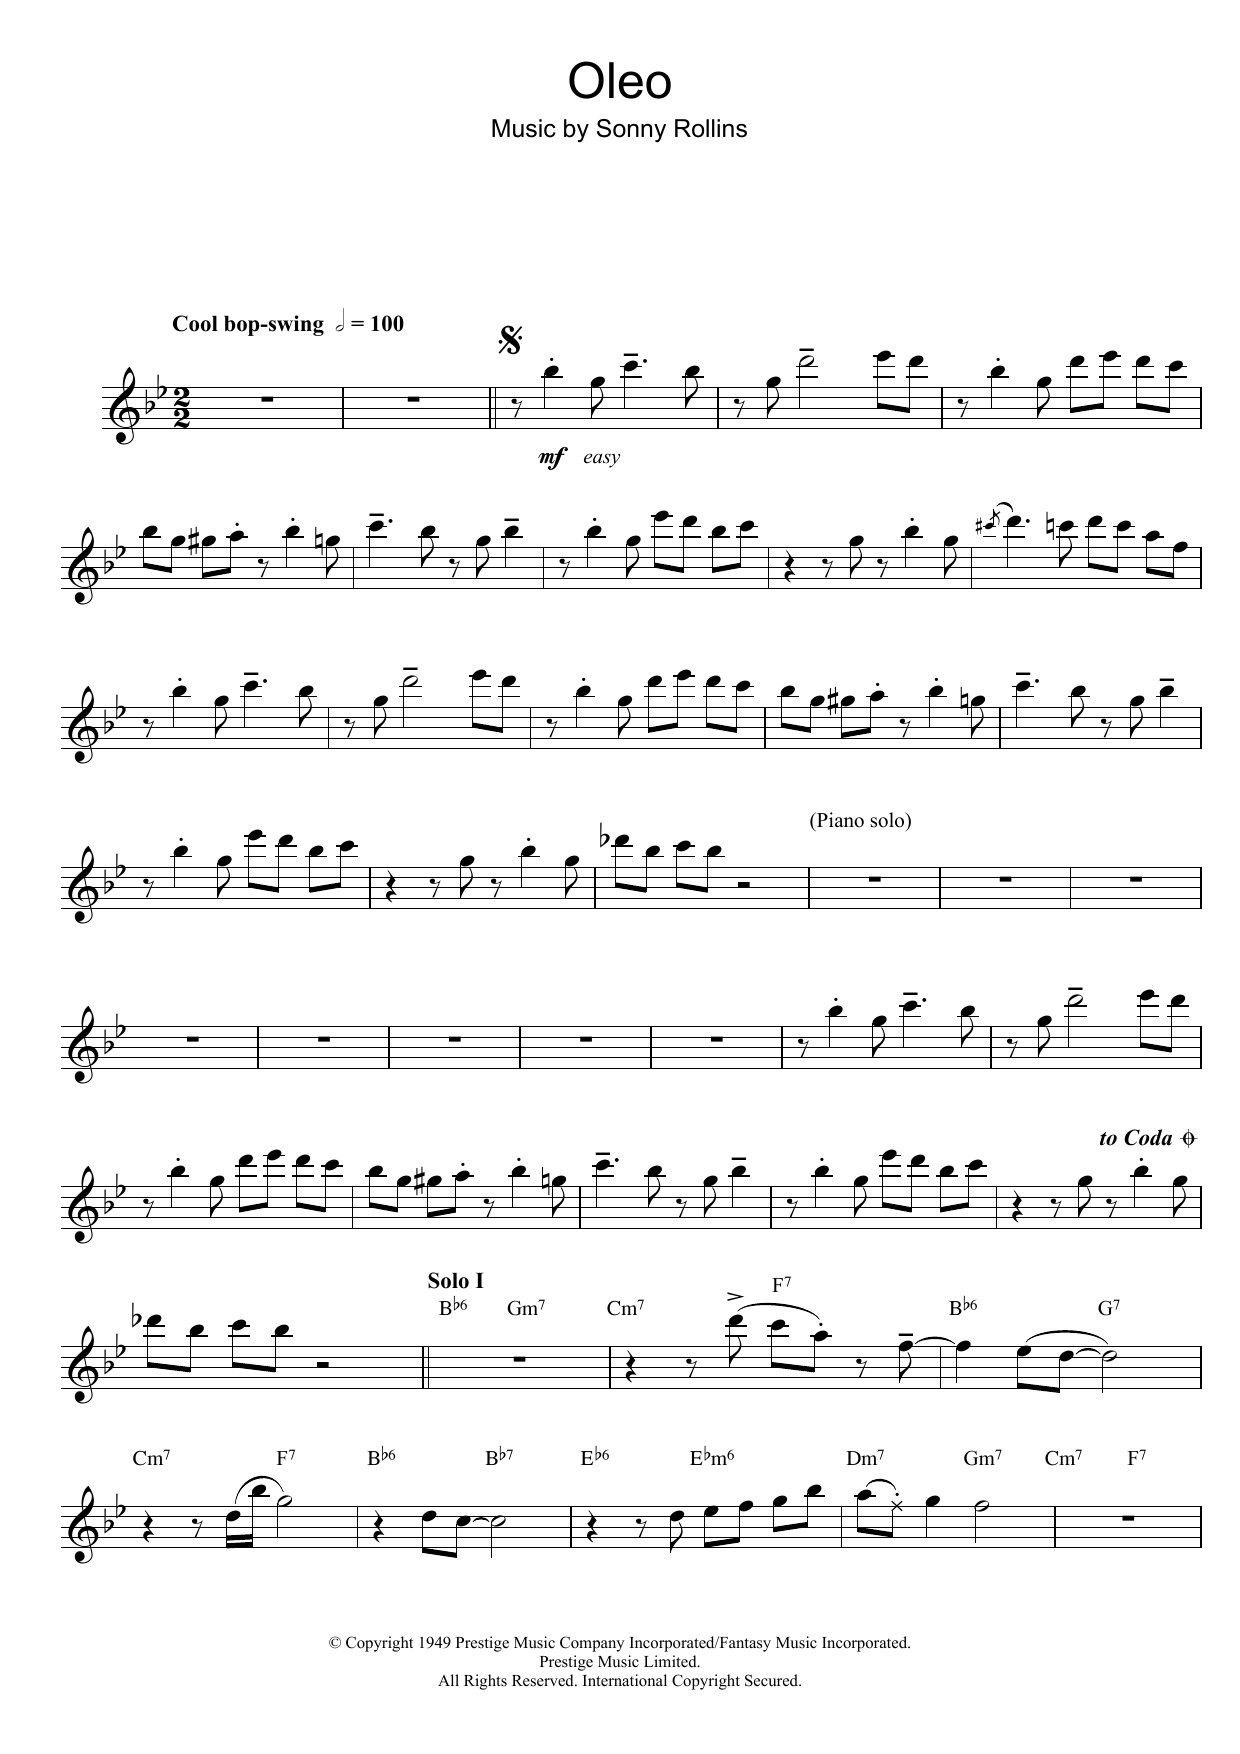 Sonny Rollins Oleo Sheet Music Notes & Chords for Flute - Download or Print PDF